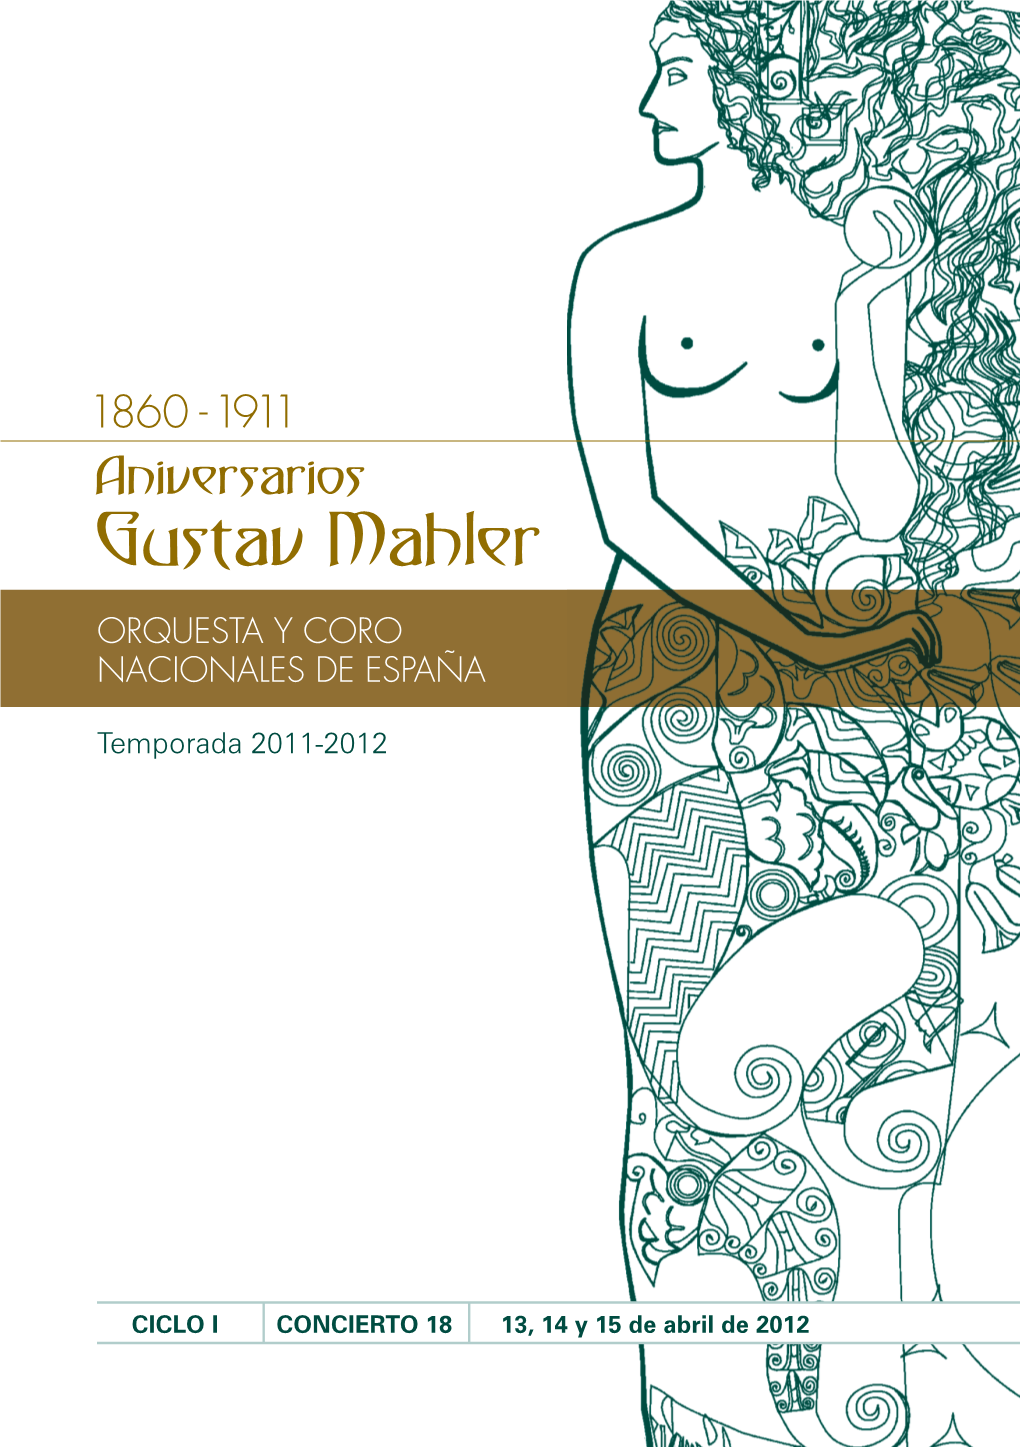 Aniversarios Gustav Mahler